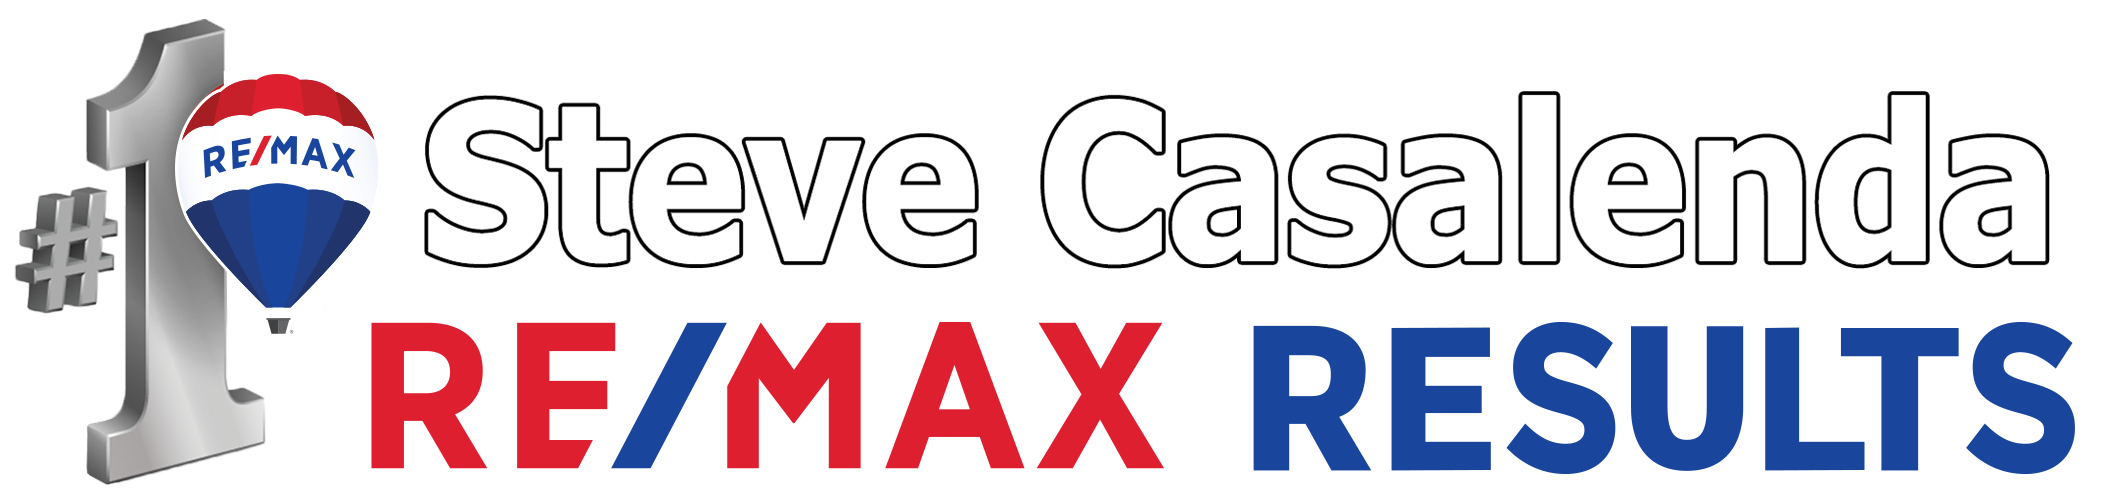 Steve Casalenda - RE/MAX Results Logo